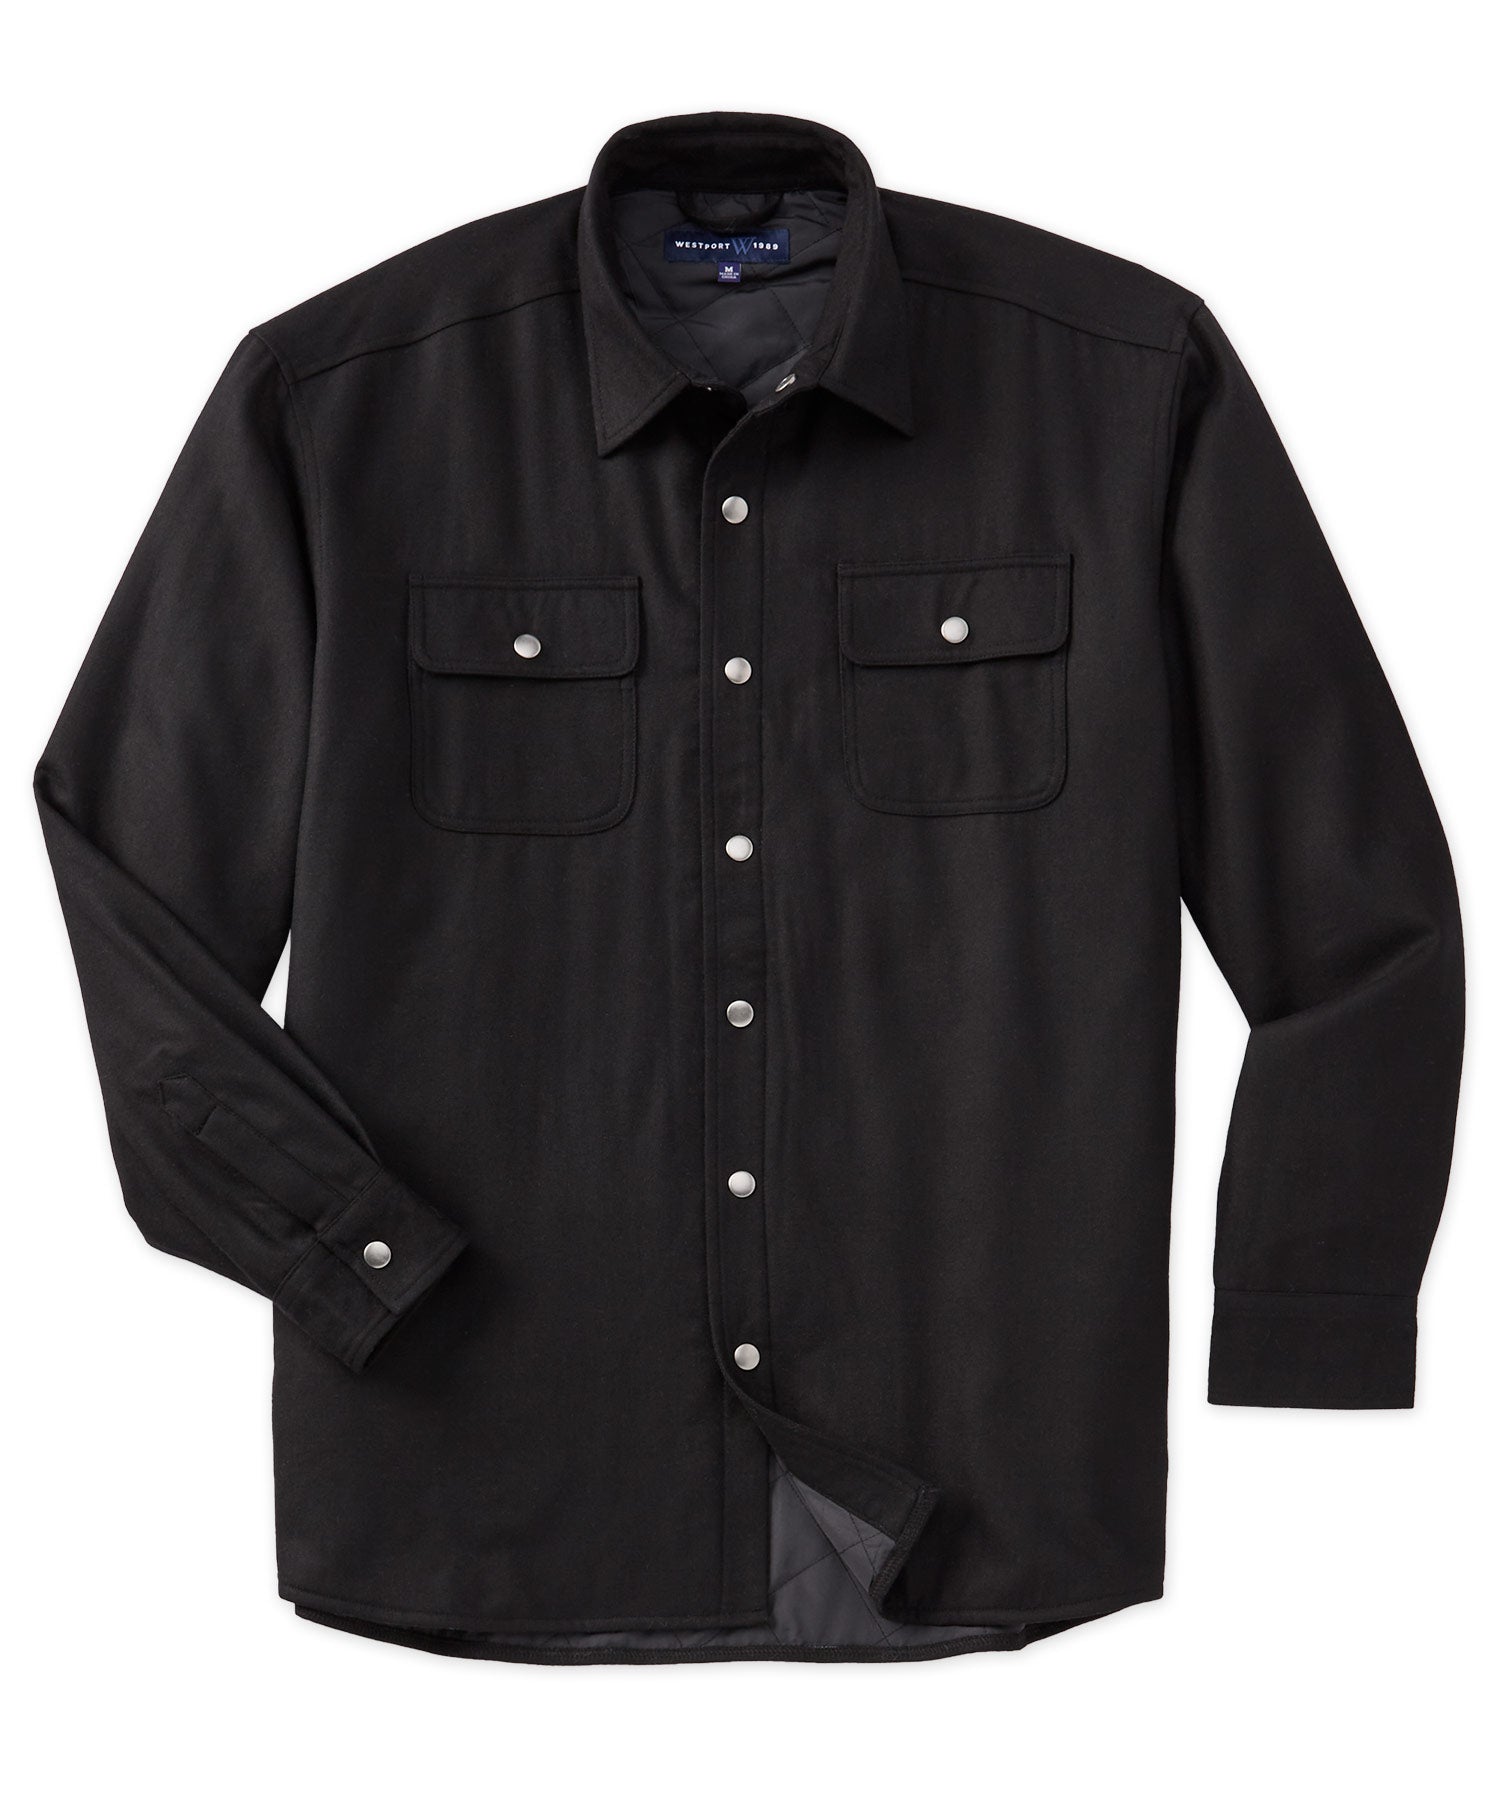 Westport Black Stretch Cotton Blouson Jacket  Blouson, Black stretch, Big  and tall jackets